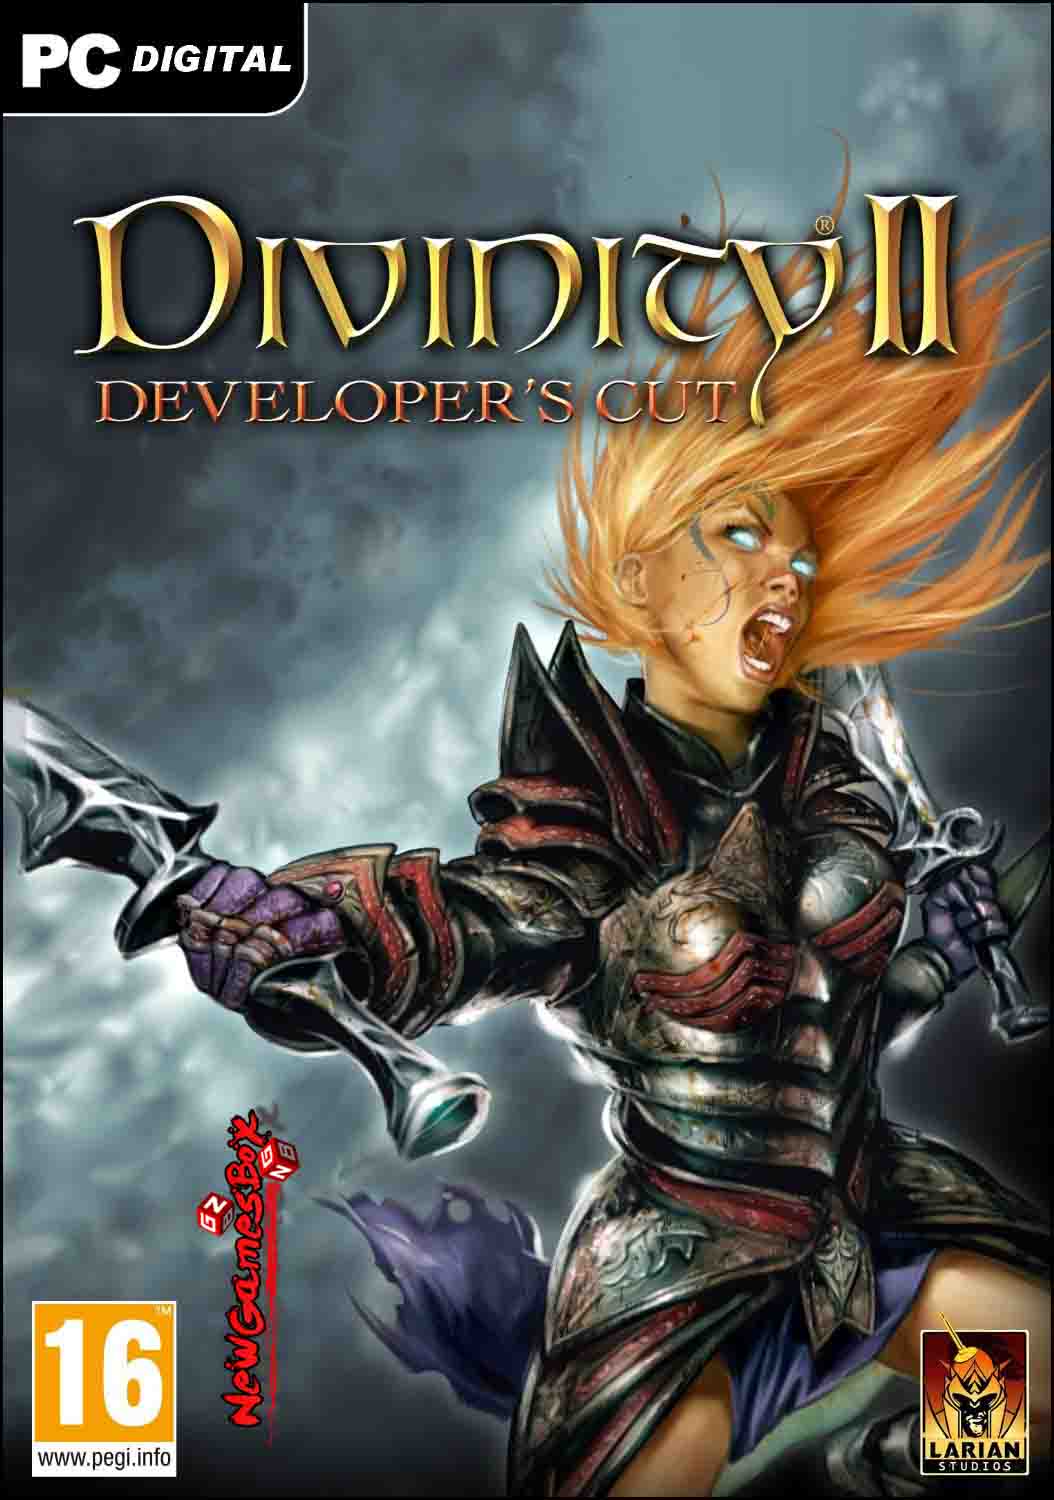 Divinity 2 Free Download Full Version Crack PC Setup